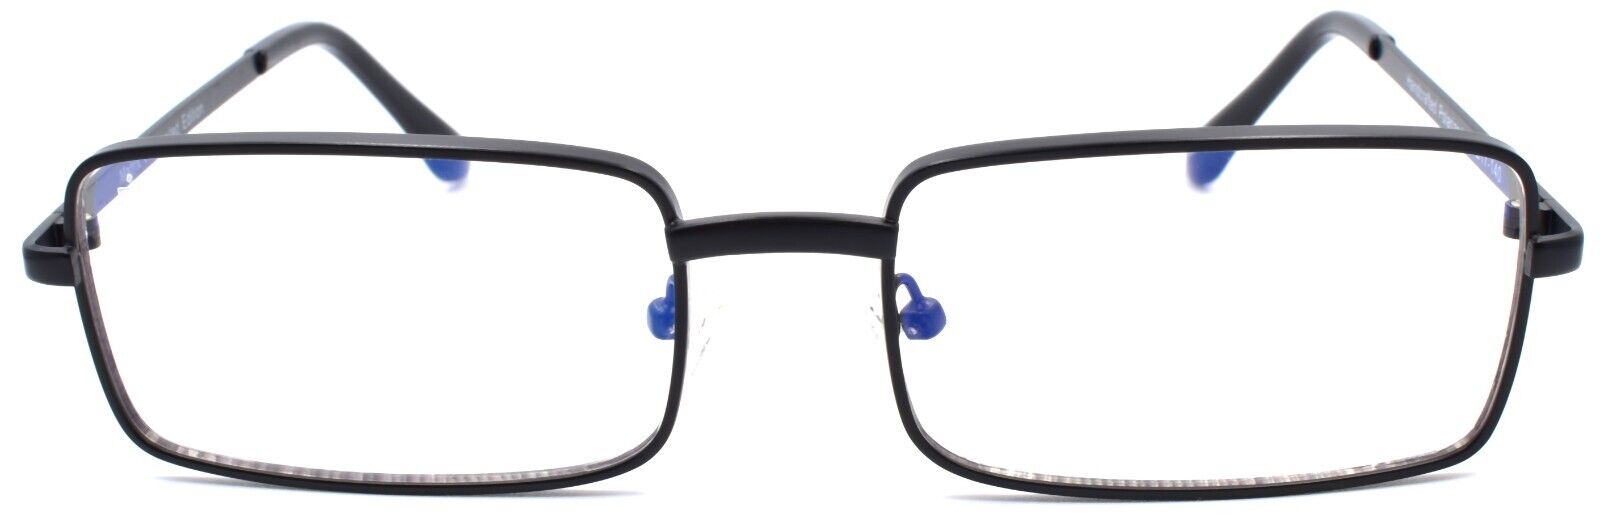 2-Prive Revaux Matrix Eyeglasses Frames Blue Light Blocking RX-ready Black-818893026201-IKSpecs